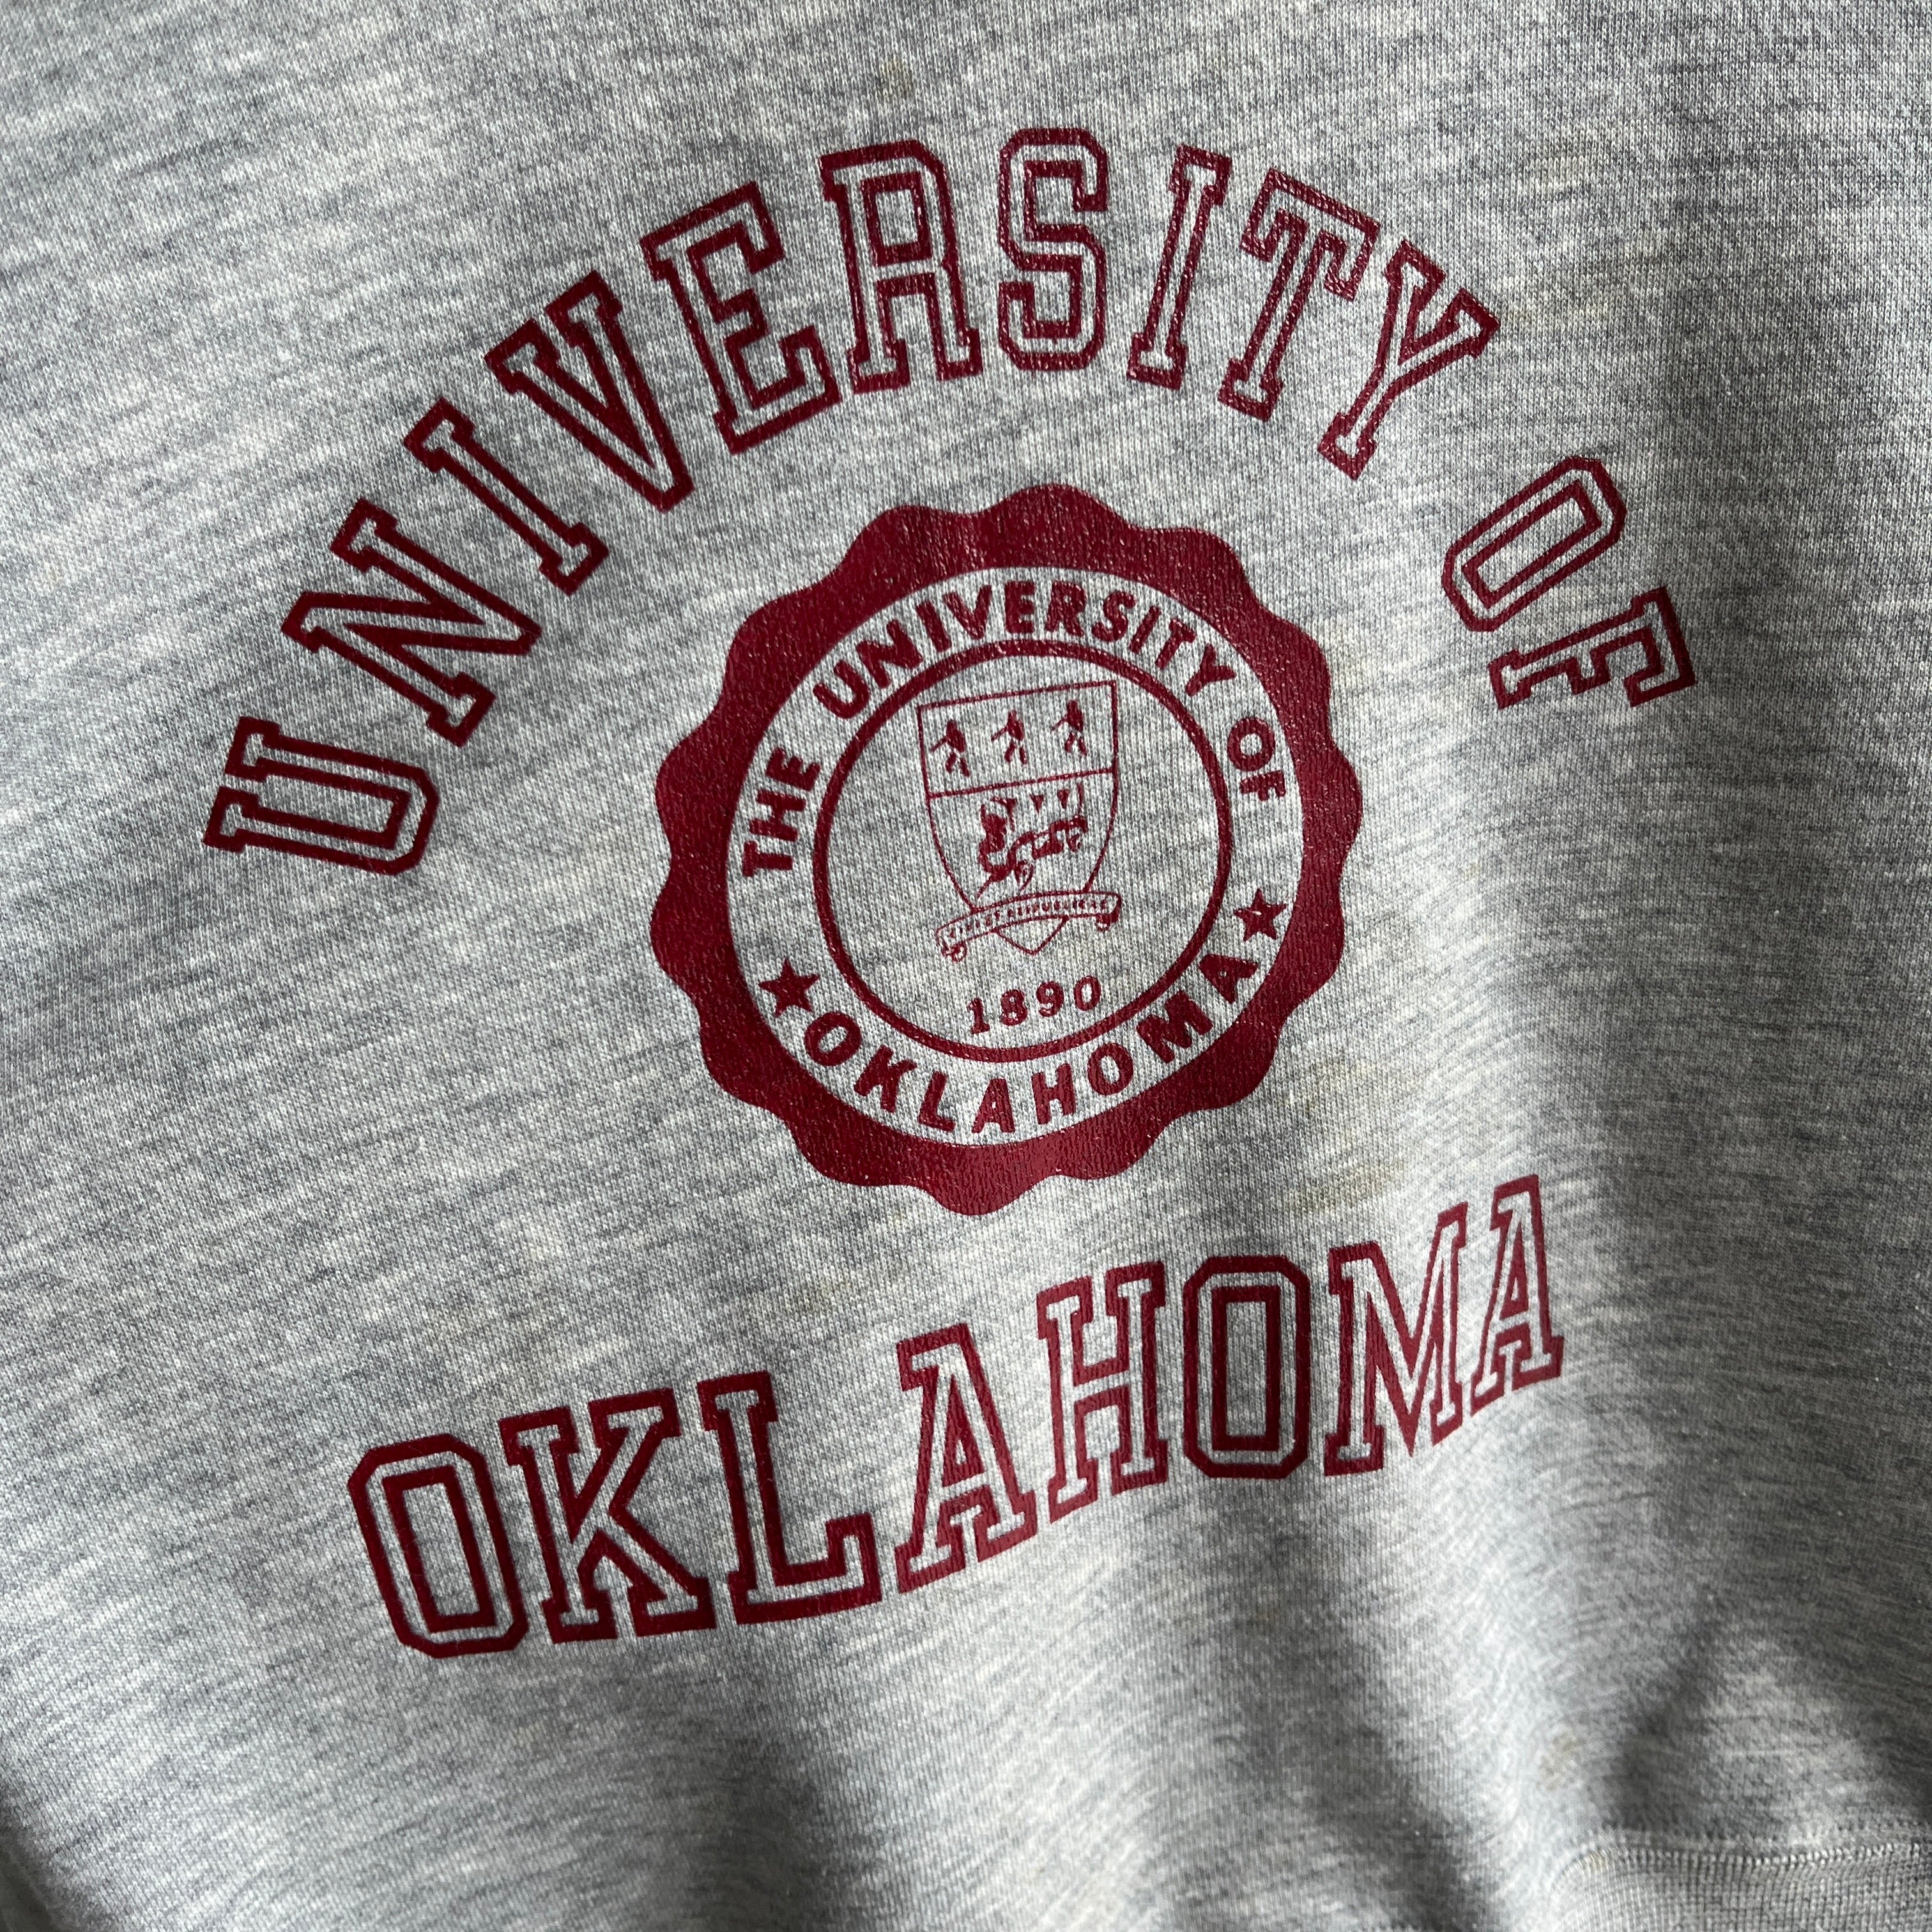 1980s University of Oklahoma Sweatshirt by Jansport (But Really Bassett Walker)